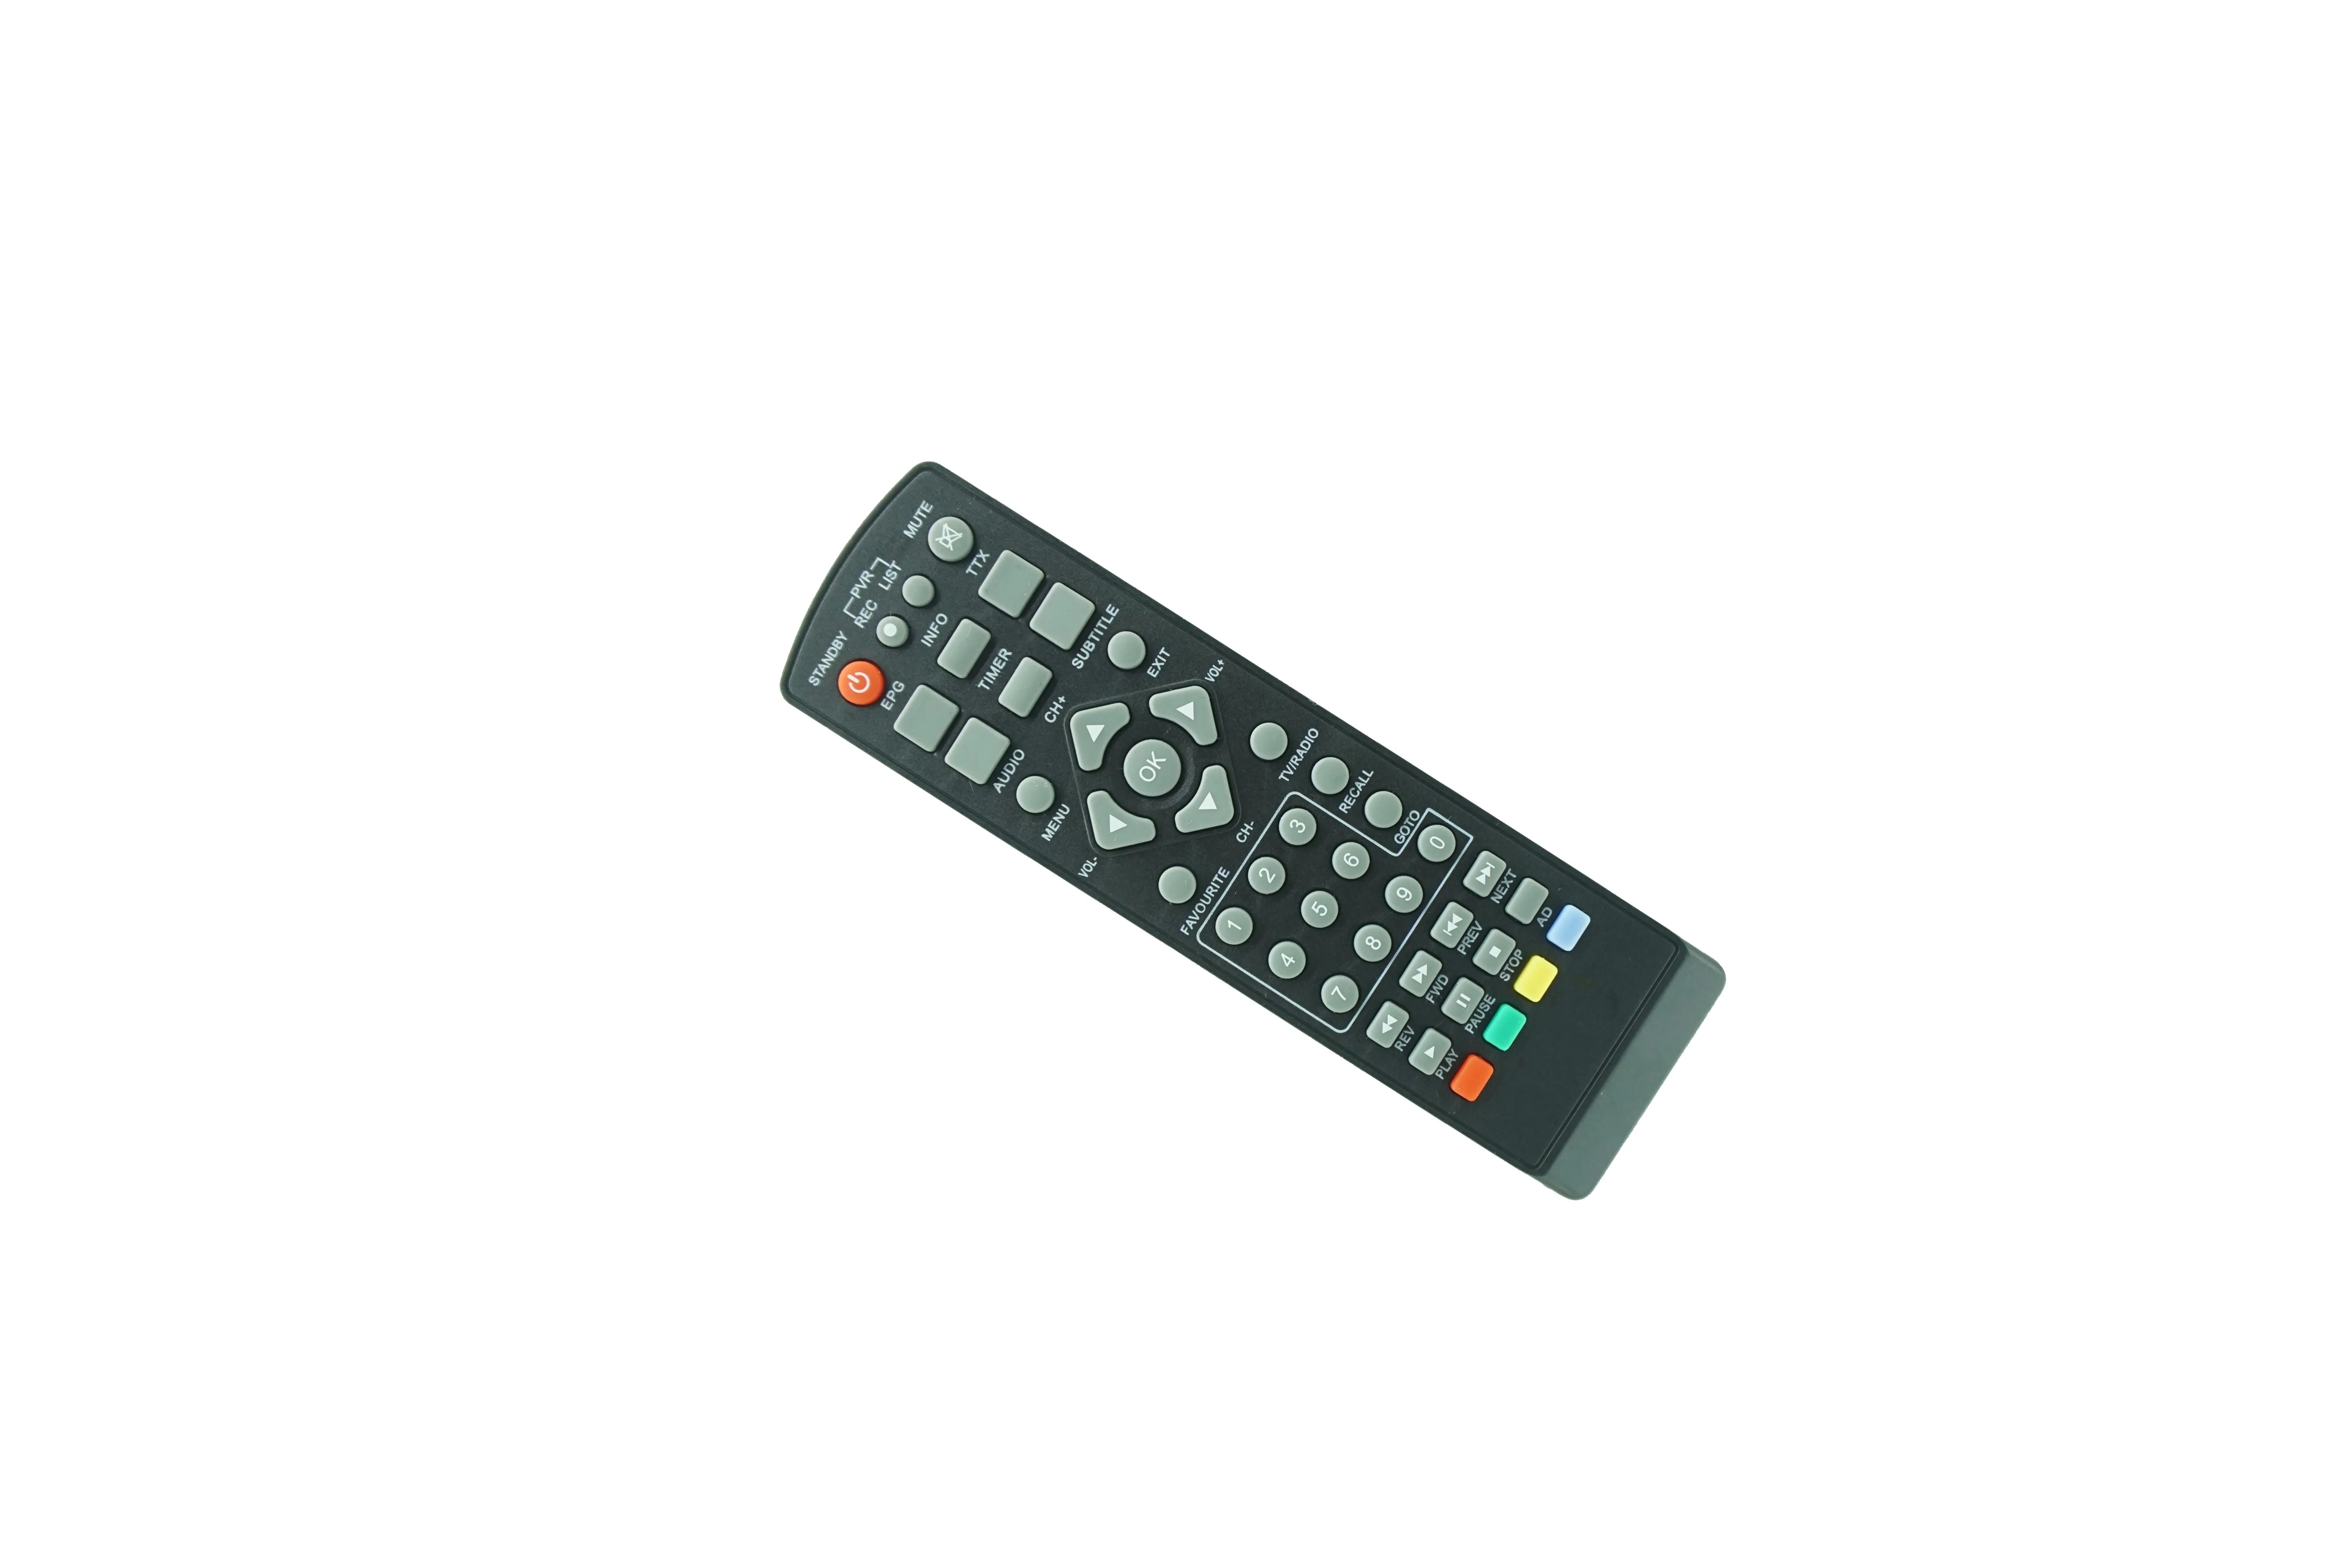 ERGO 1217 1204スマートHD SD DVB-S2 DVB-T DVB-T2デジタルSATレシーバーの交換リモートコントロール